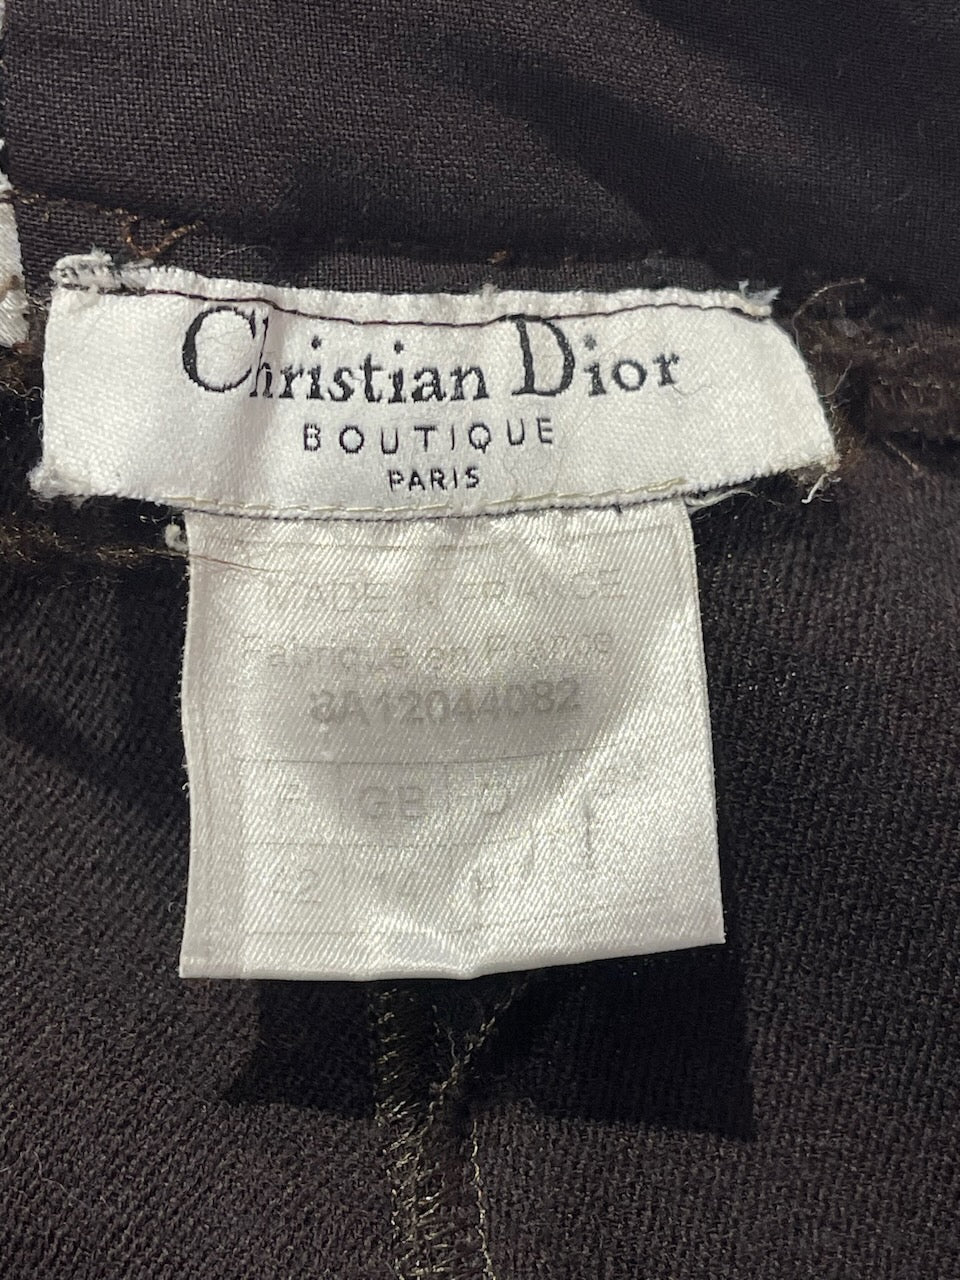 Pantalon Christian Dior marron T.42